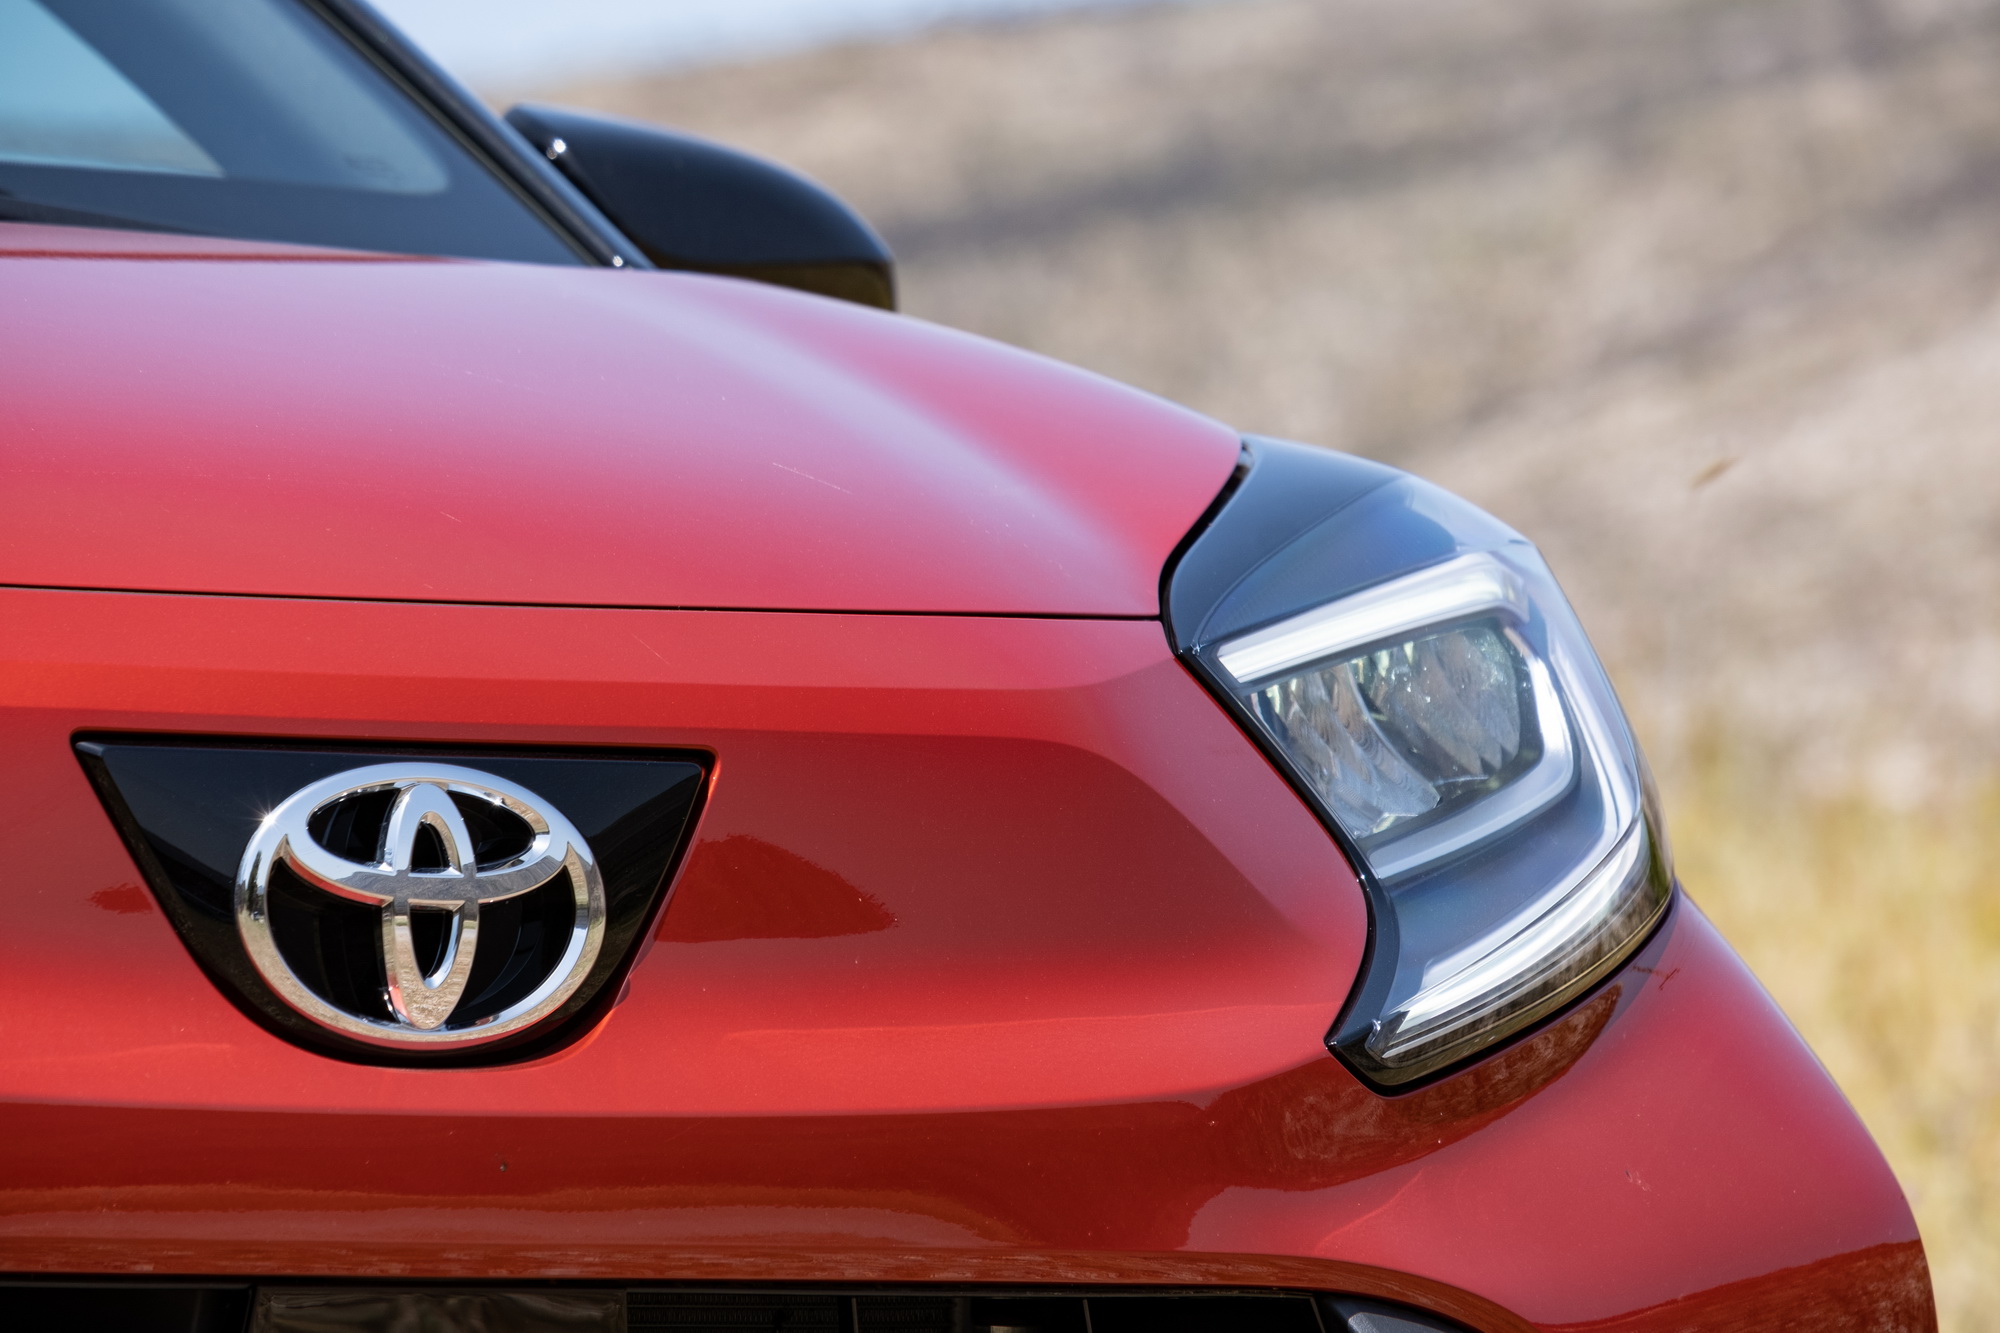 Test drive: Toyota Aygo X 1.0, photo credits DRIVE Media Group/Fotini Pimpa